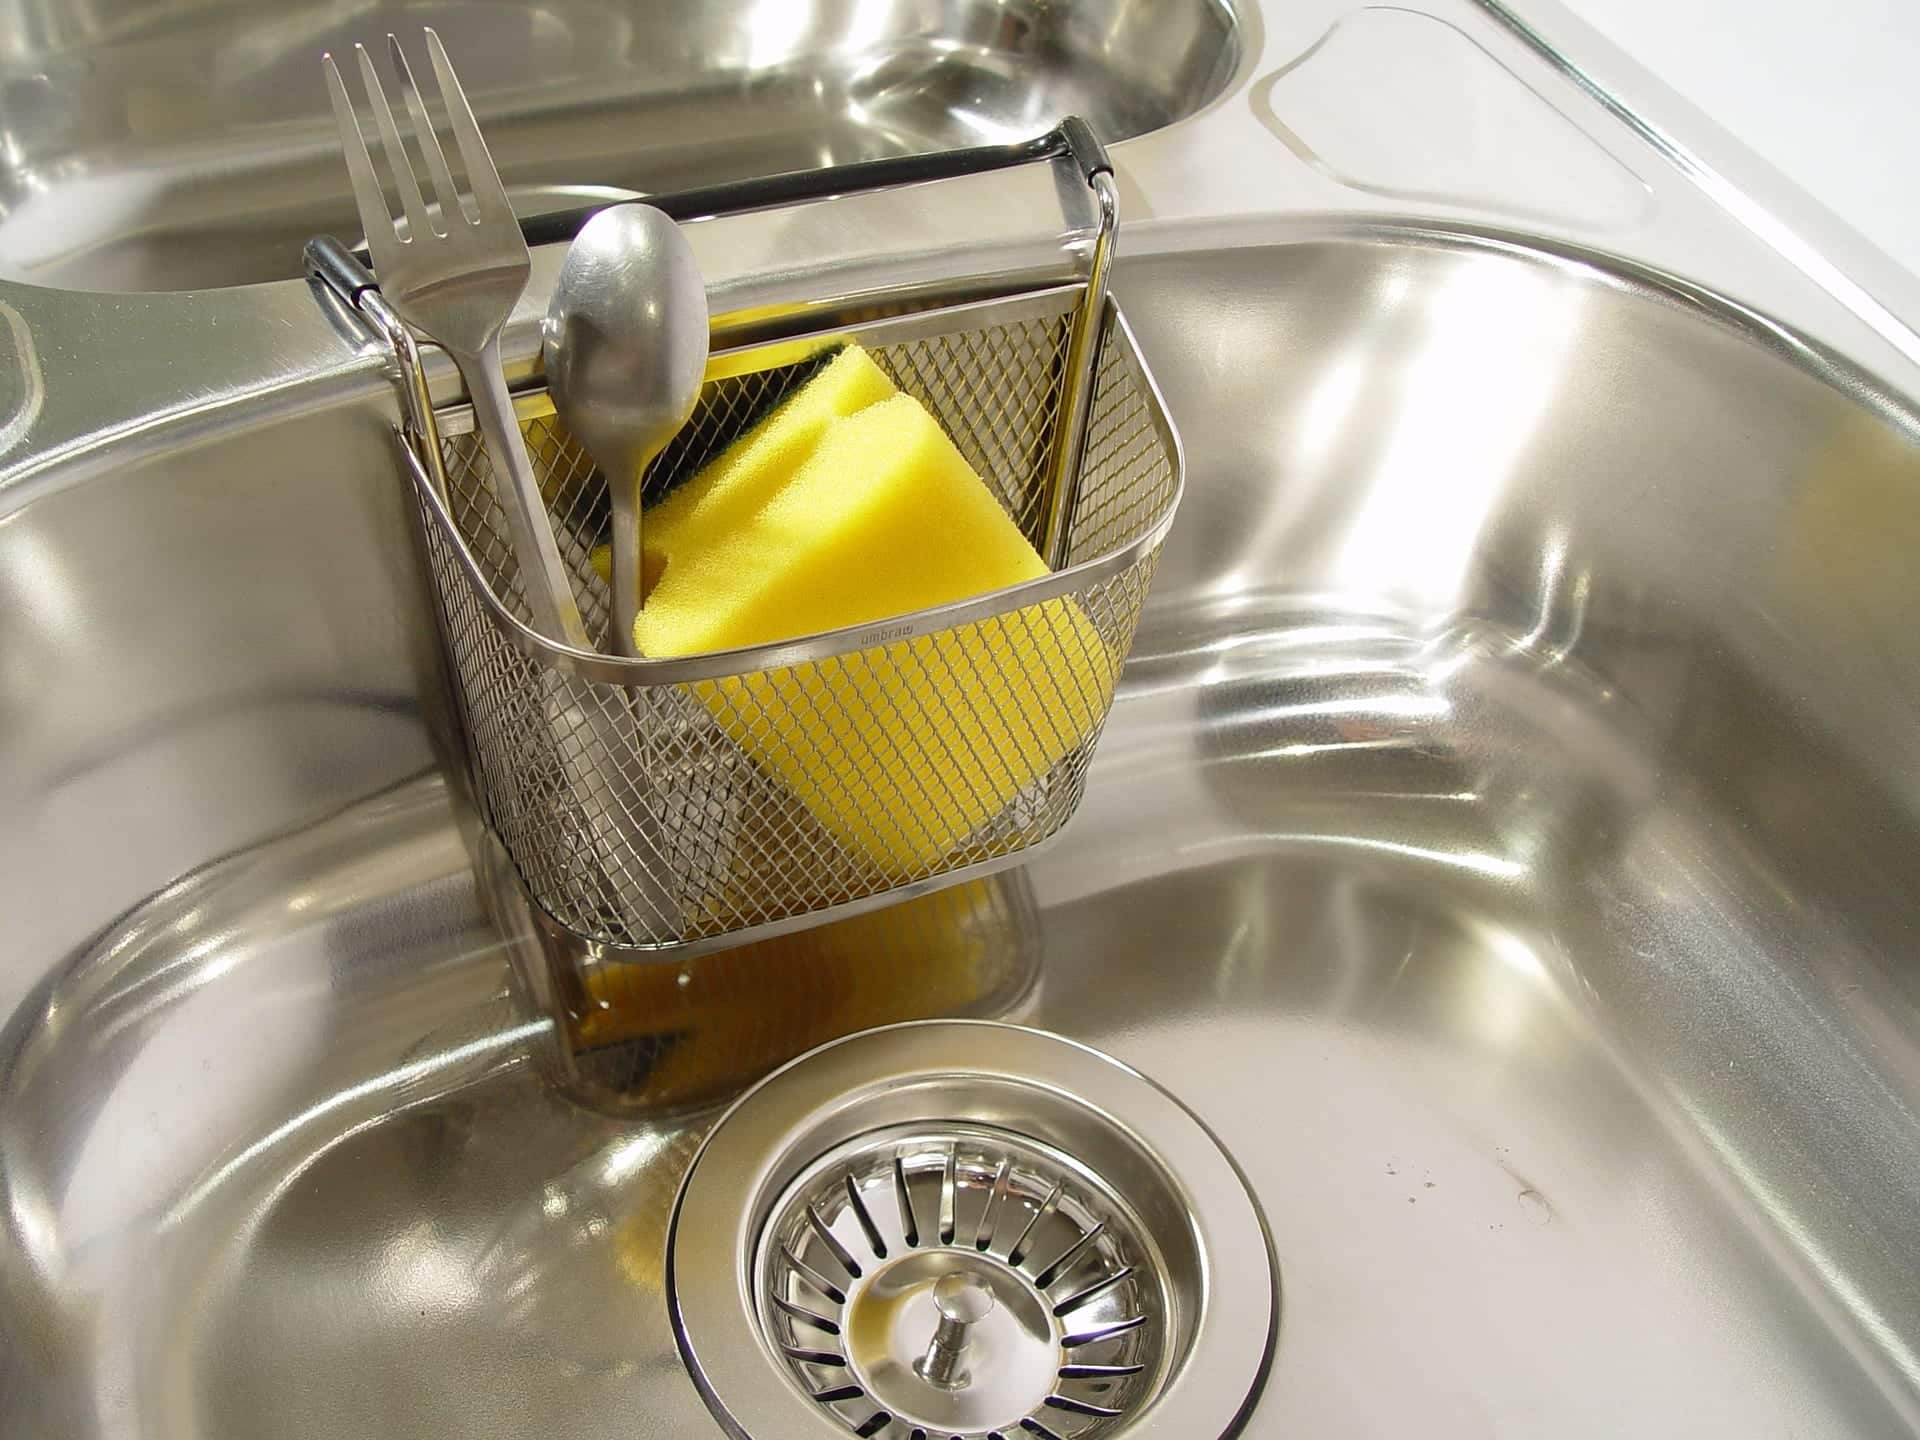 pouring chlorine down a kitchen sink